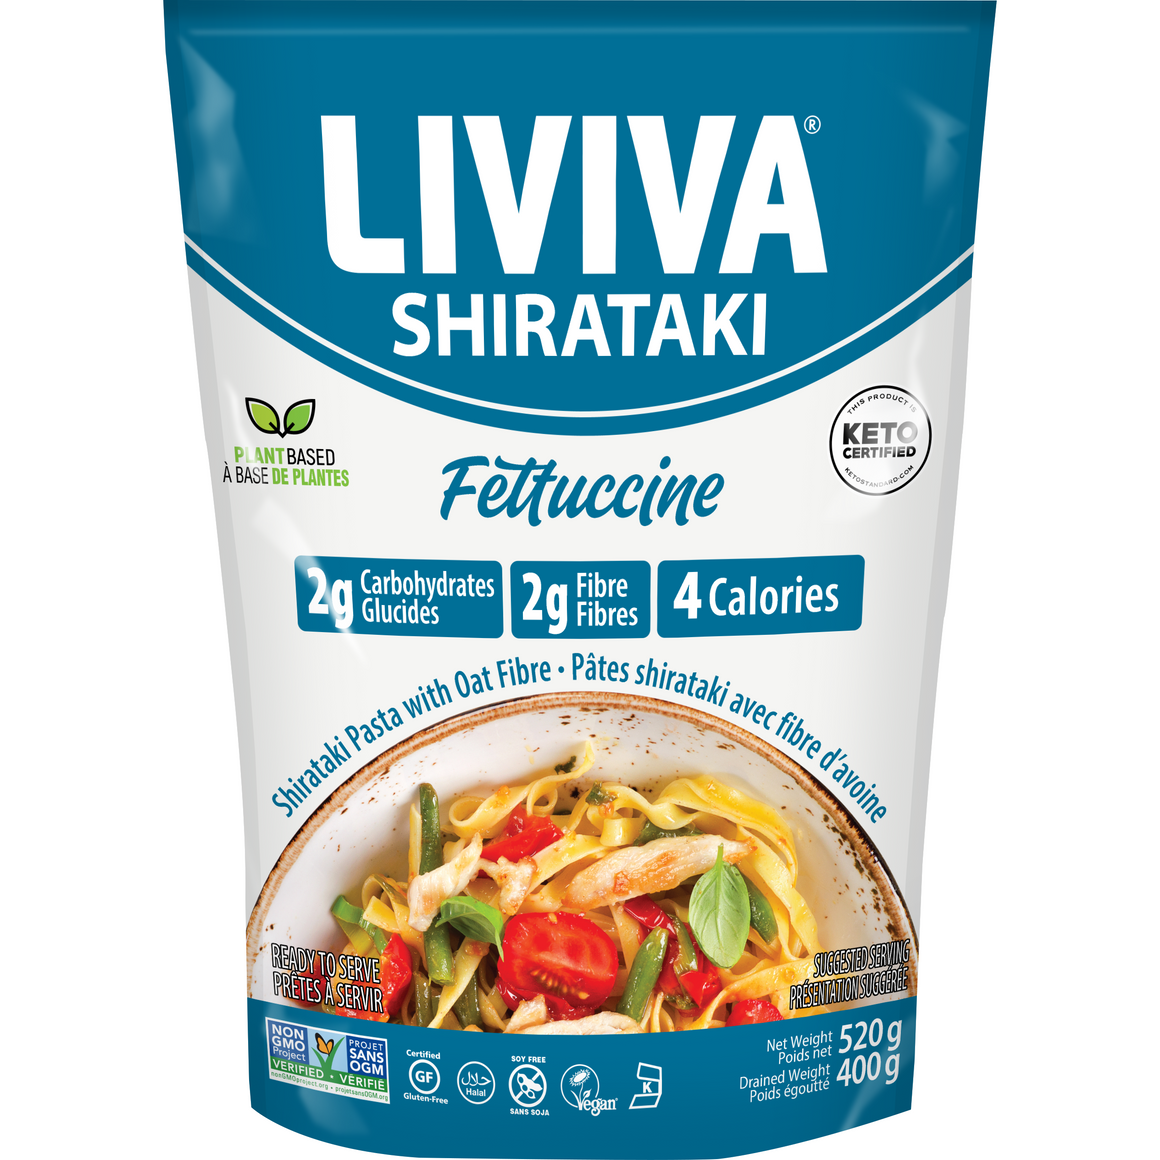 Liviva Organic Shirataki Fettuccine with Oat Fiber